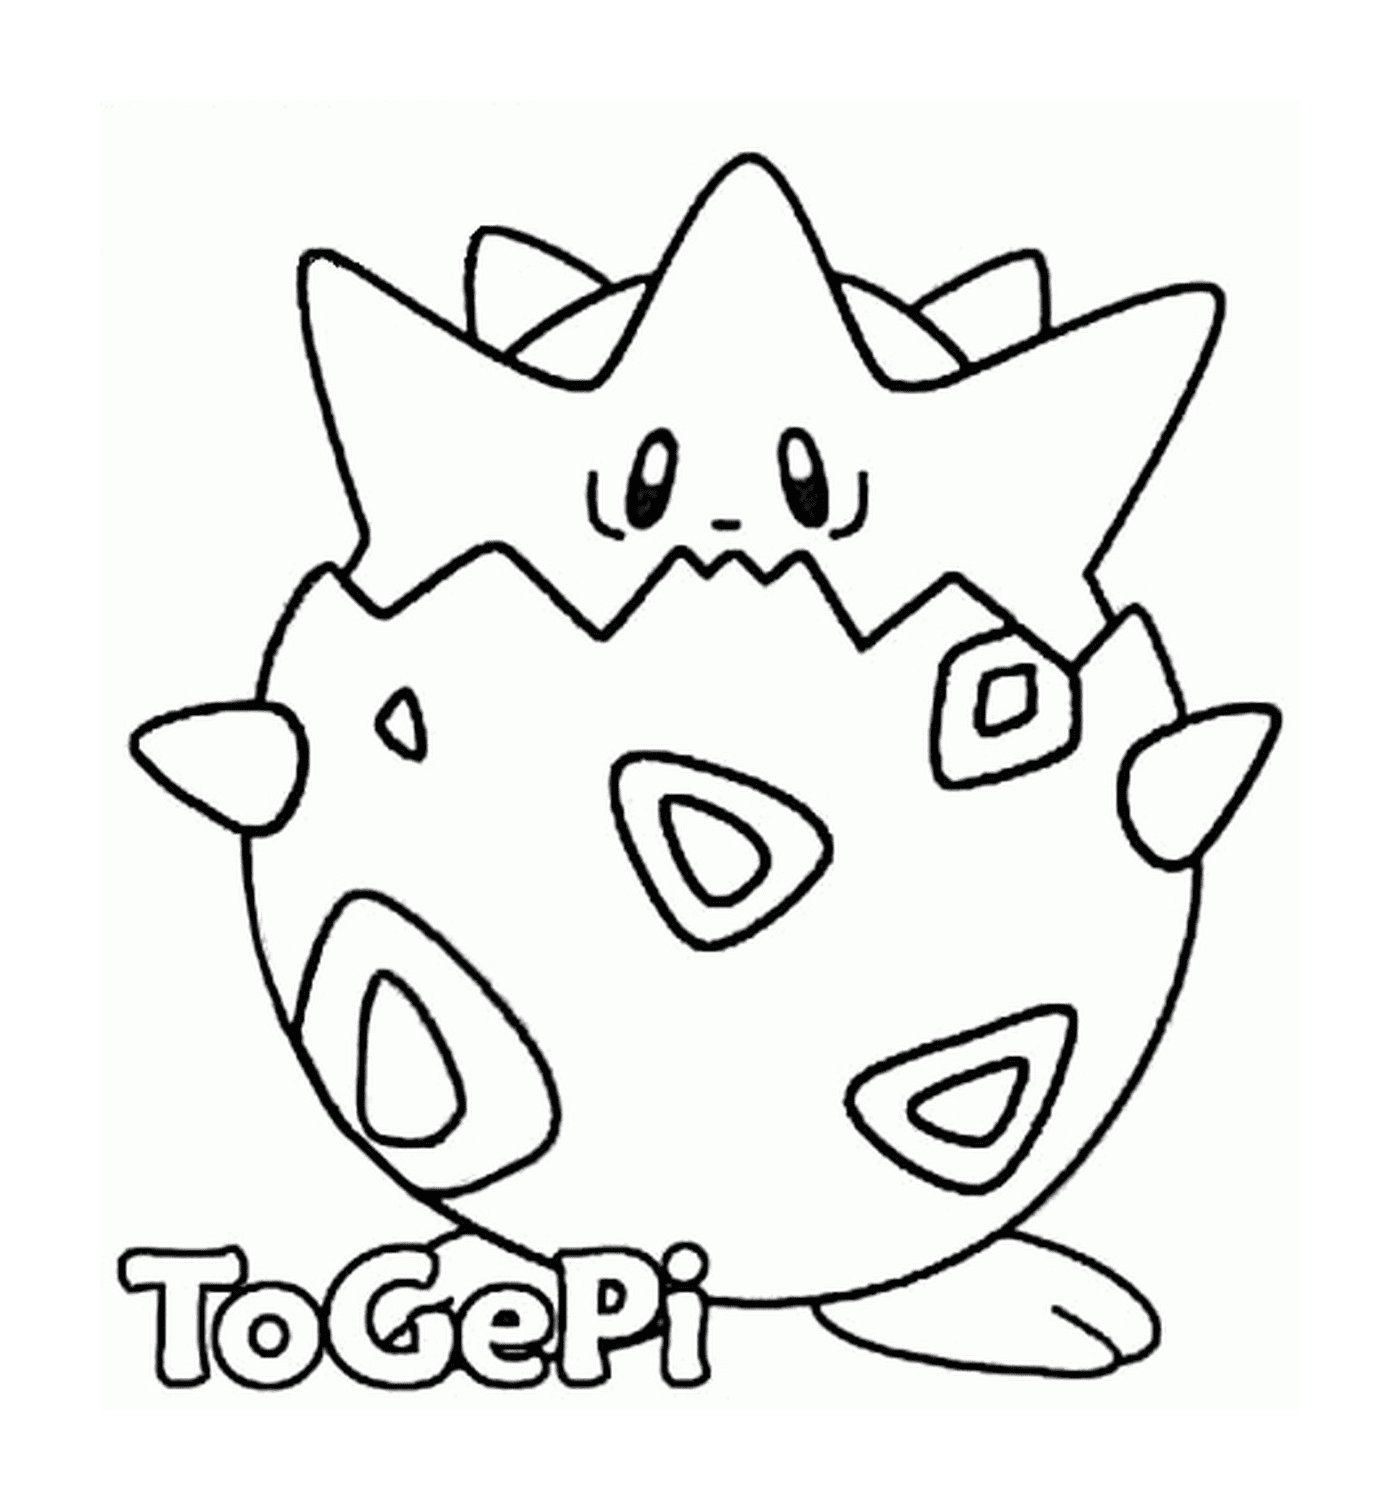  Color Pokémon Togepi 